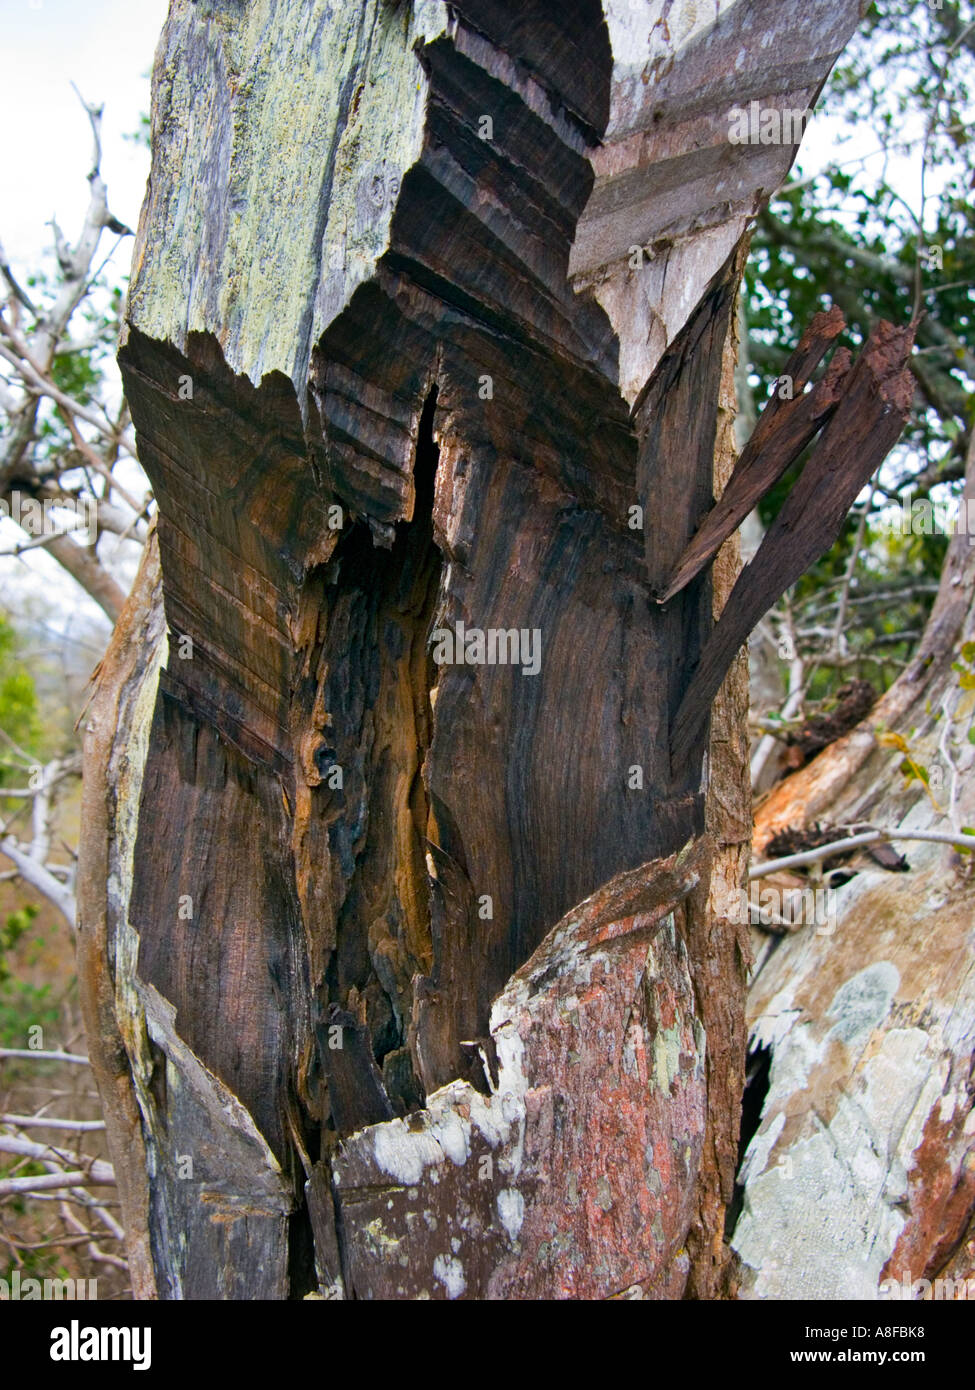 african EBONY hard wood wooden tree Kenya east africa kenia Stock Photo -  Alamy